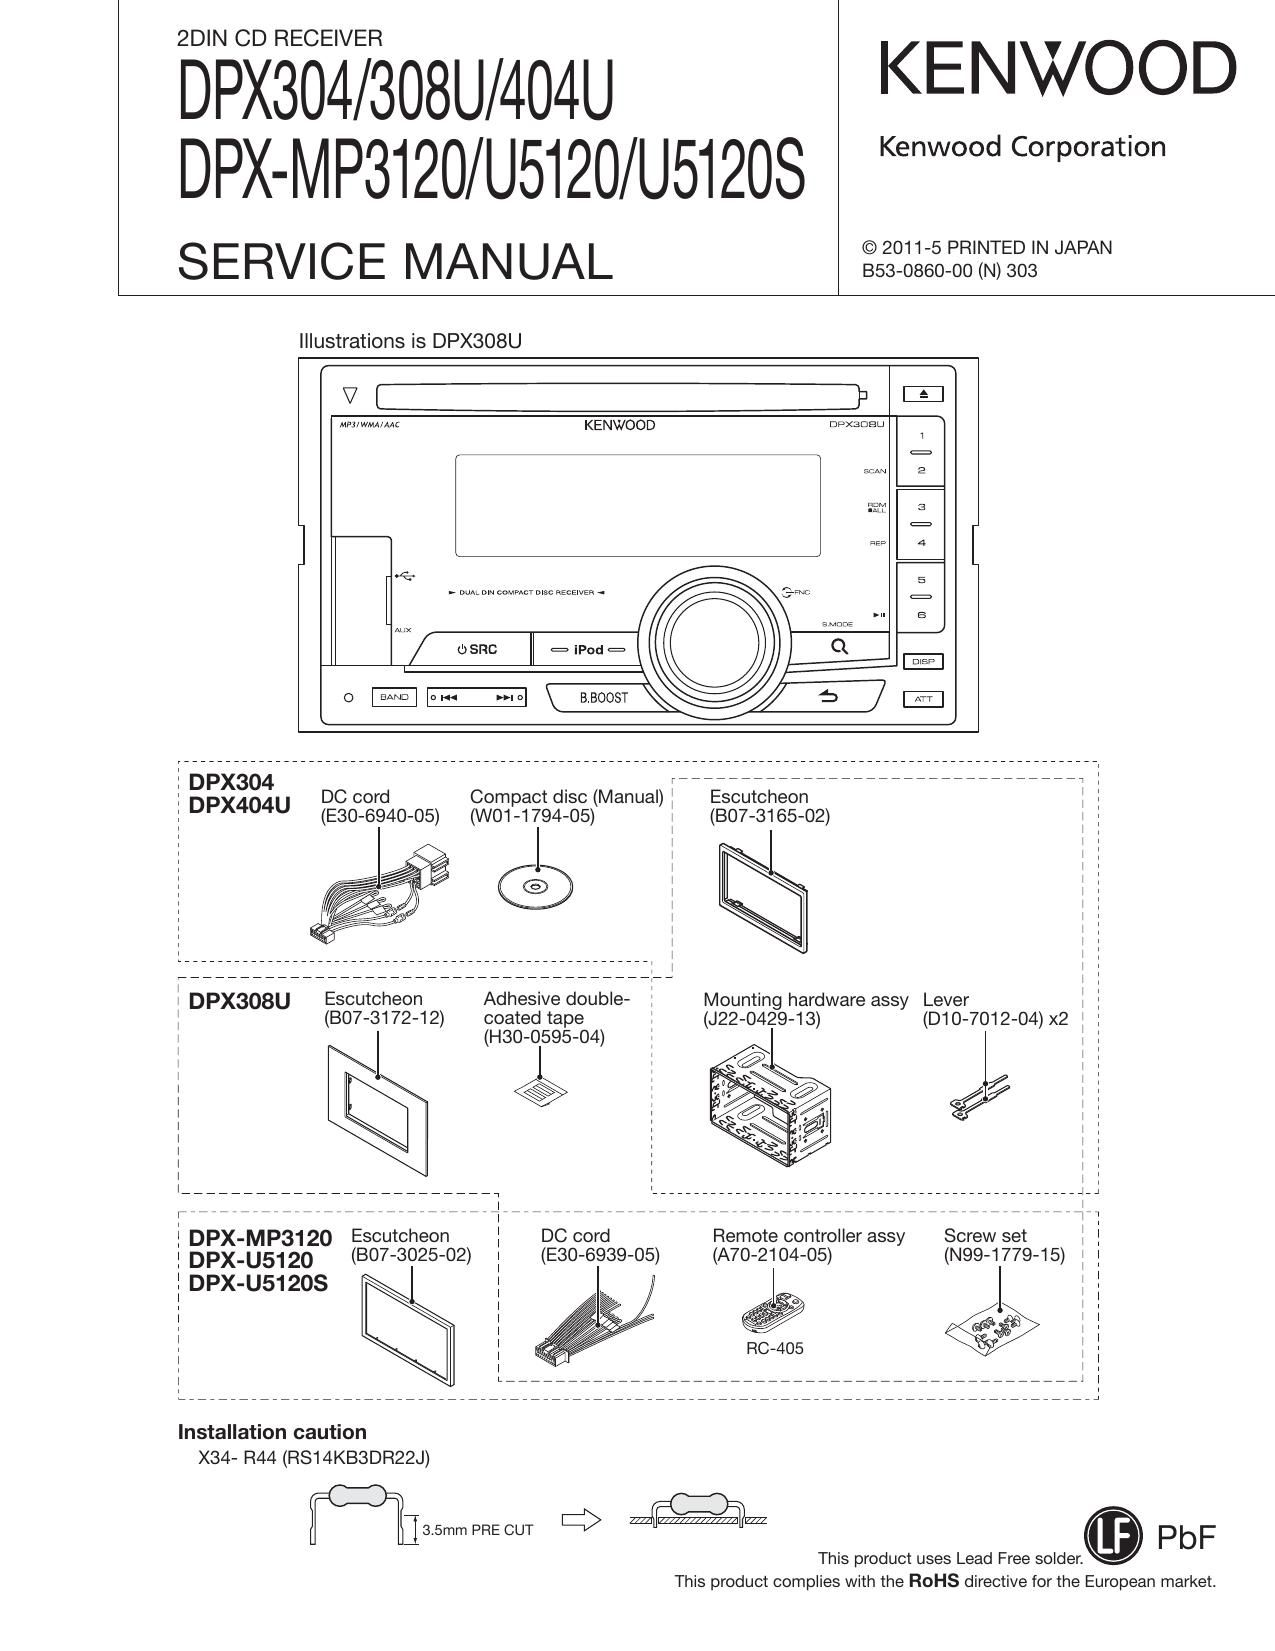 Kenwood DPXMP 3120 Service Manual